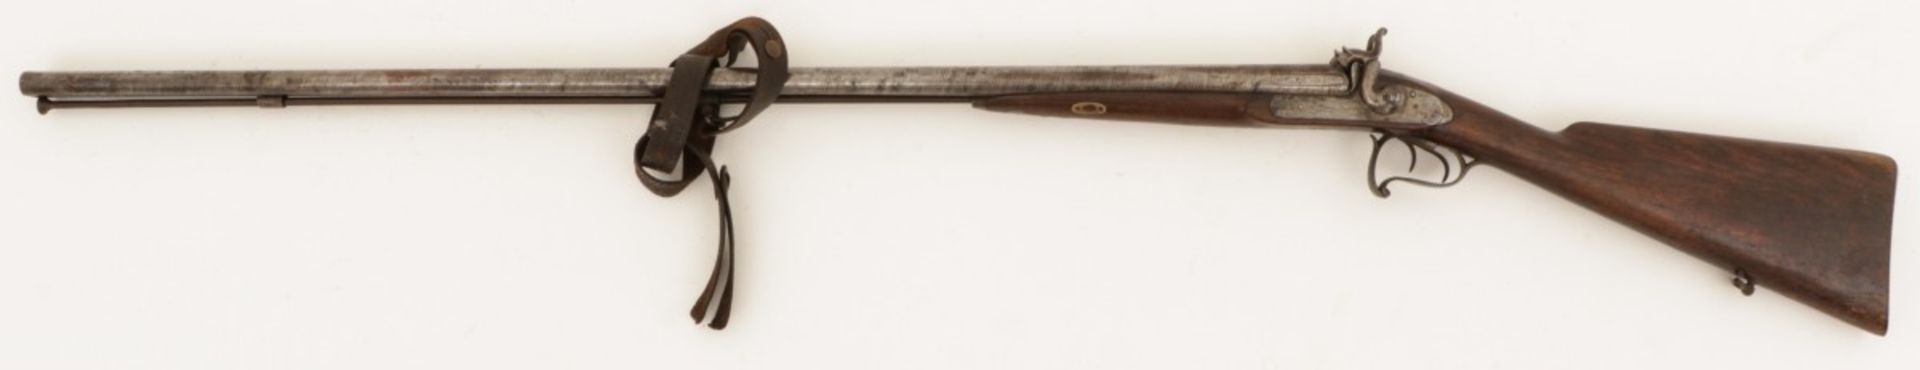 A MAS percussion rifle, France, late 19th century.